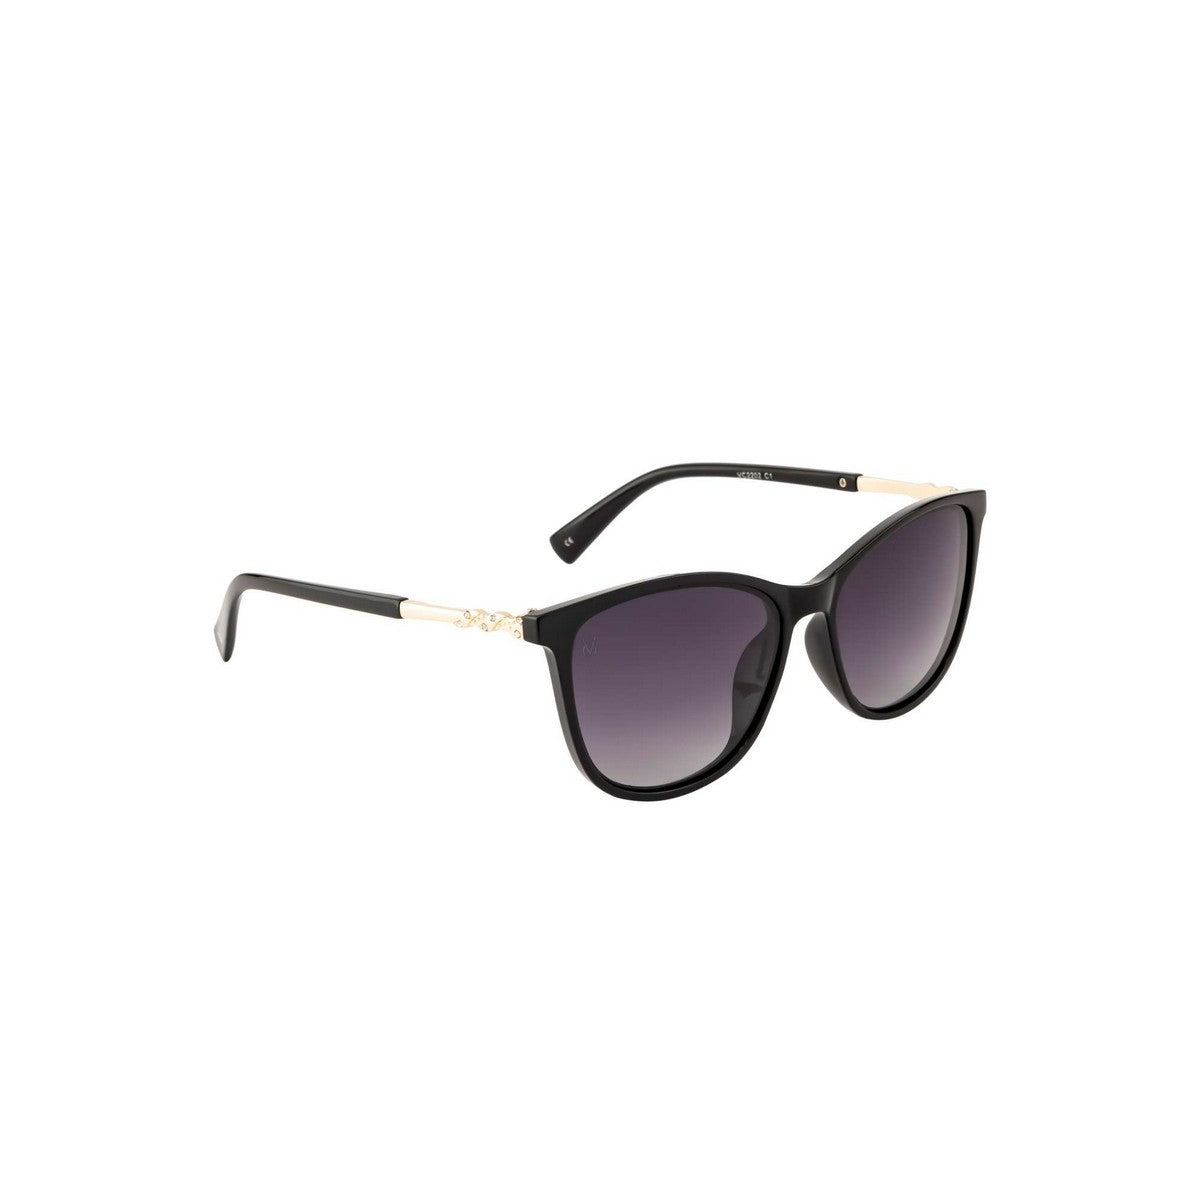 City Chic: Polarized Sunglasses with Sleek Matte Black Frames